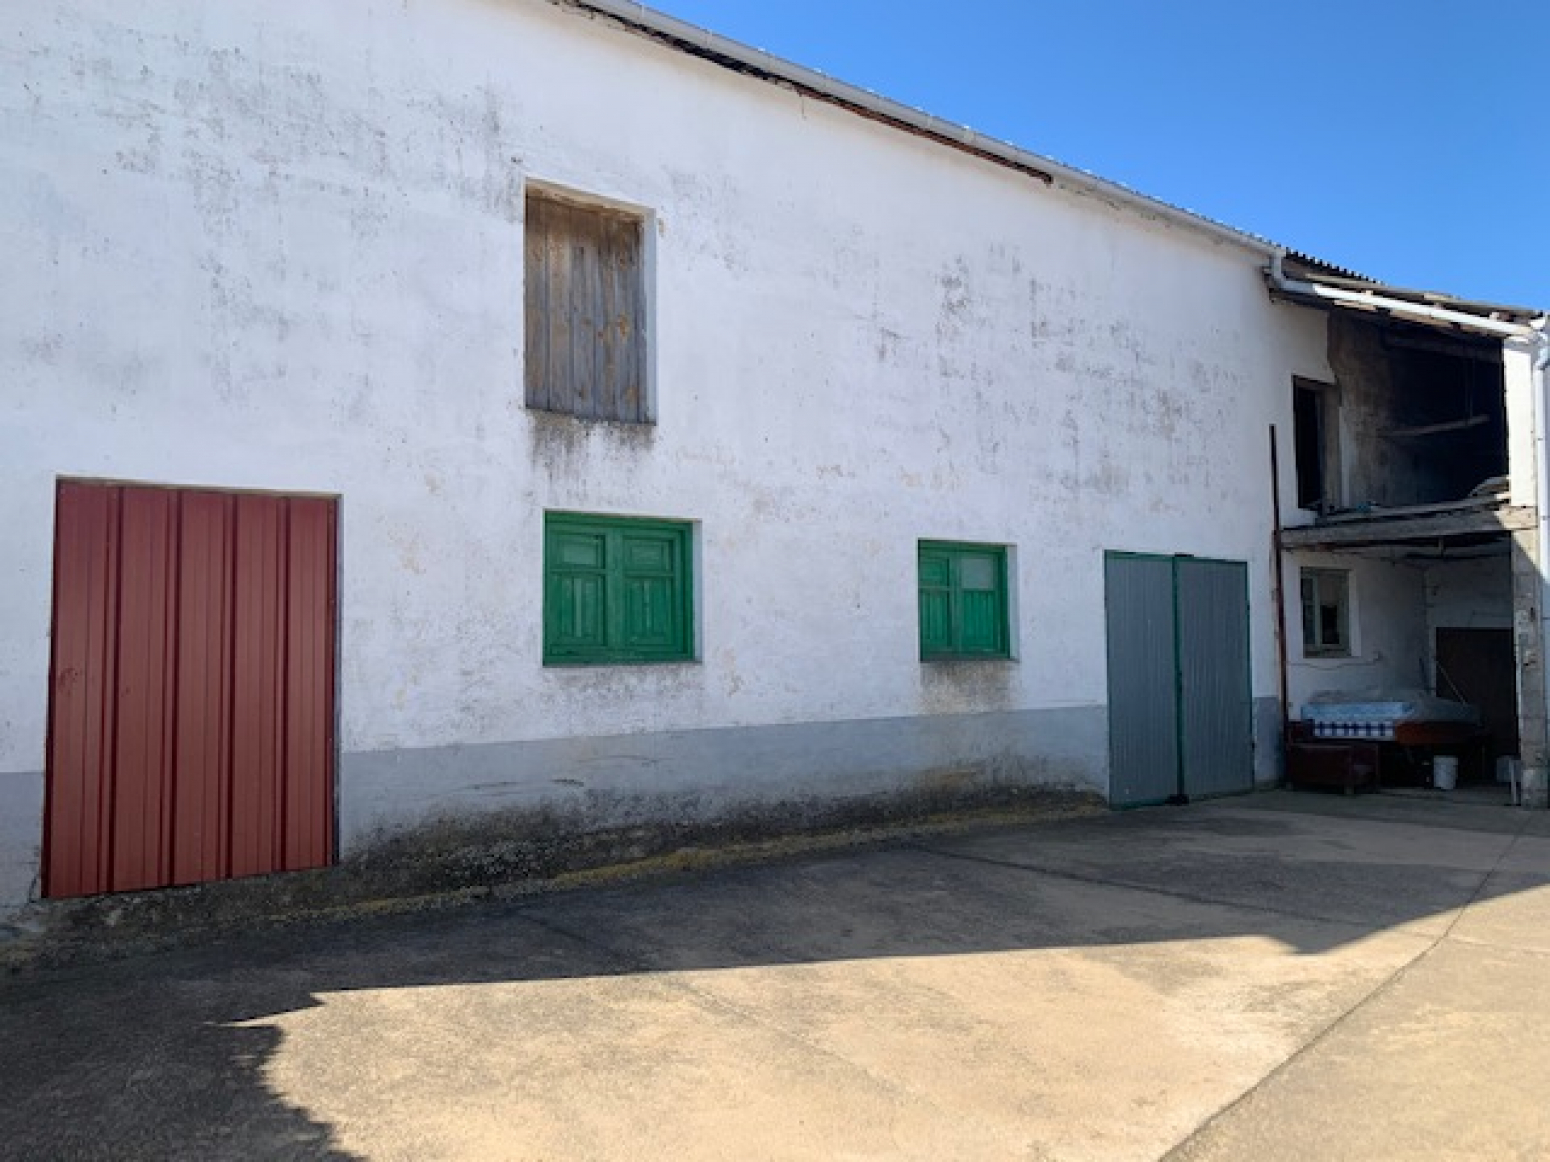 Casa cercana a Aguilar de Campoo